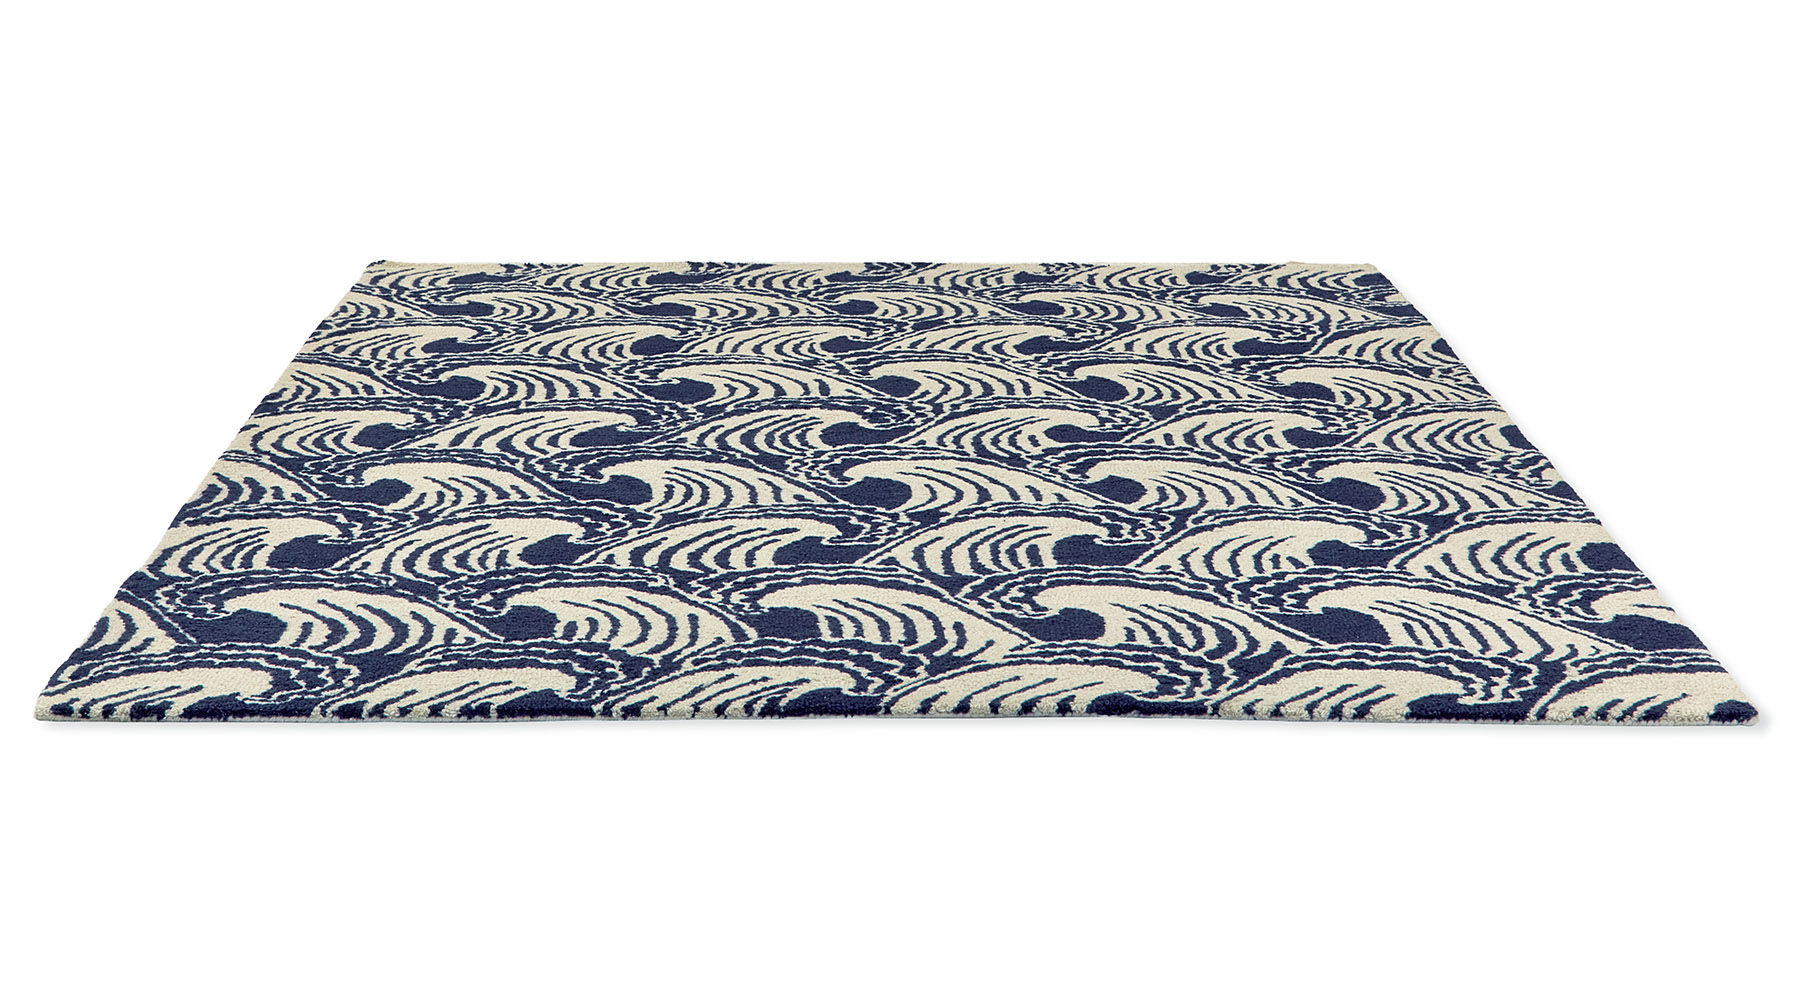 Waves Denim Rug ☞ Size: 5' 3" x 7' 7" (160 x 230 cm)